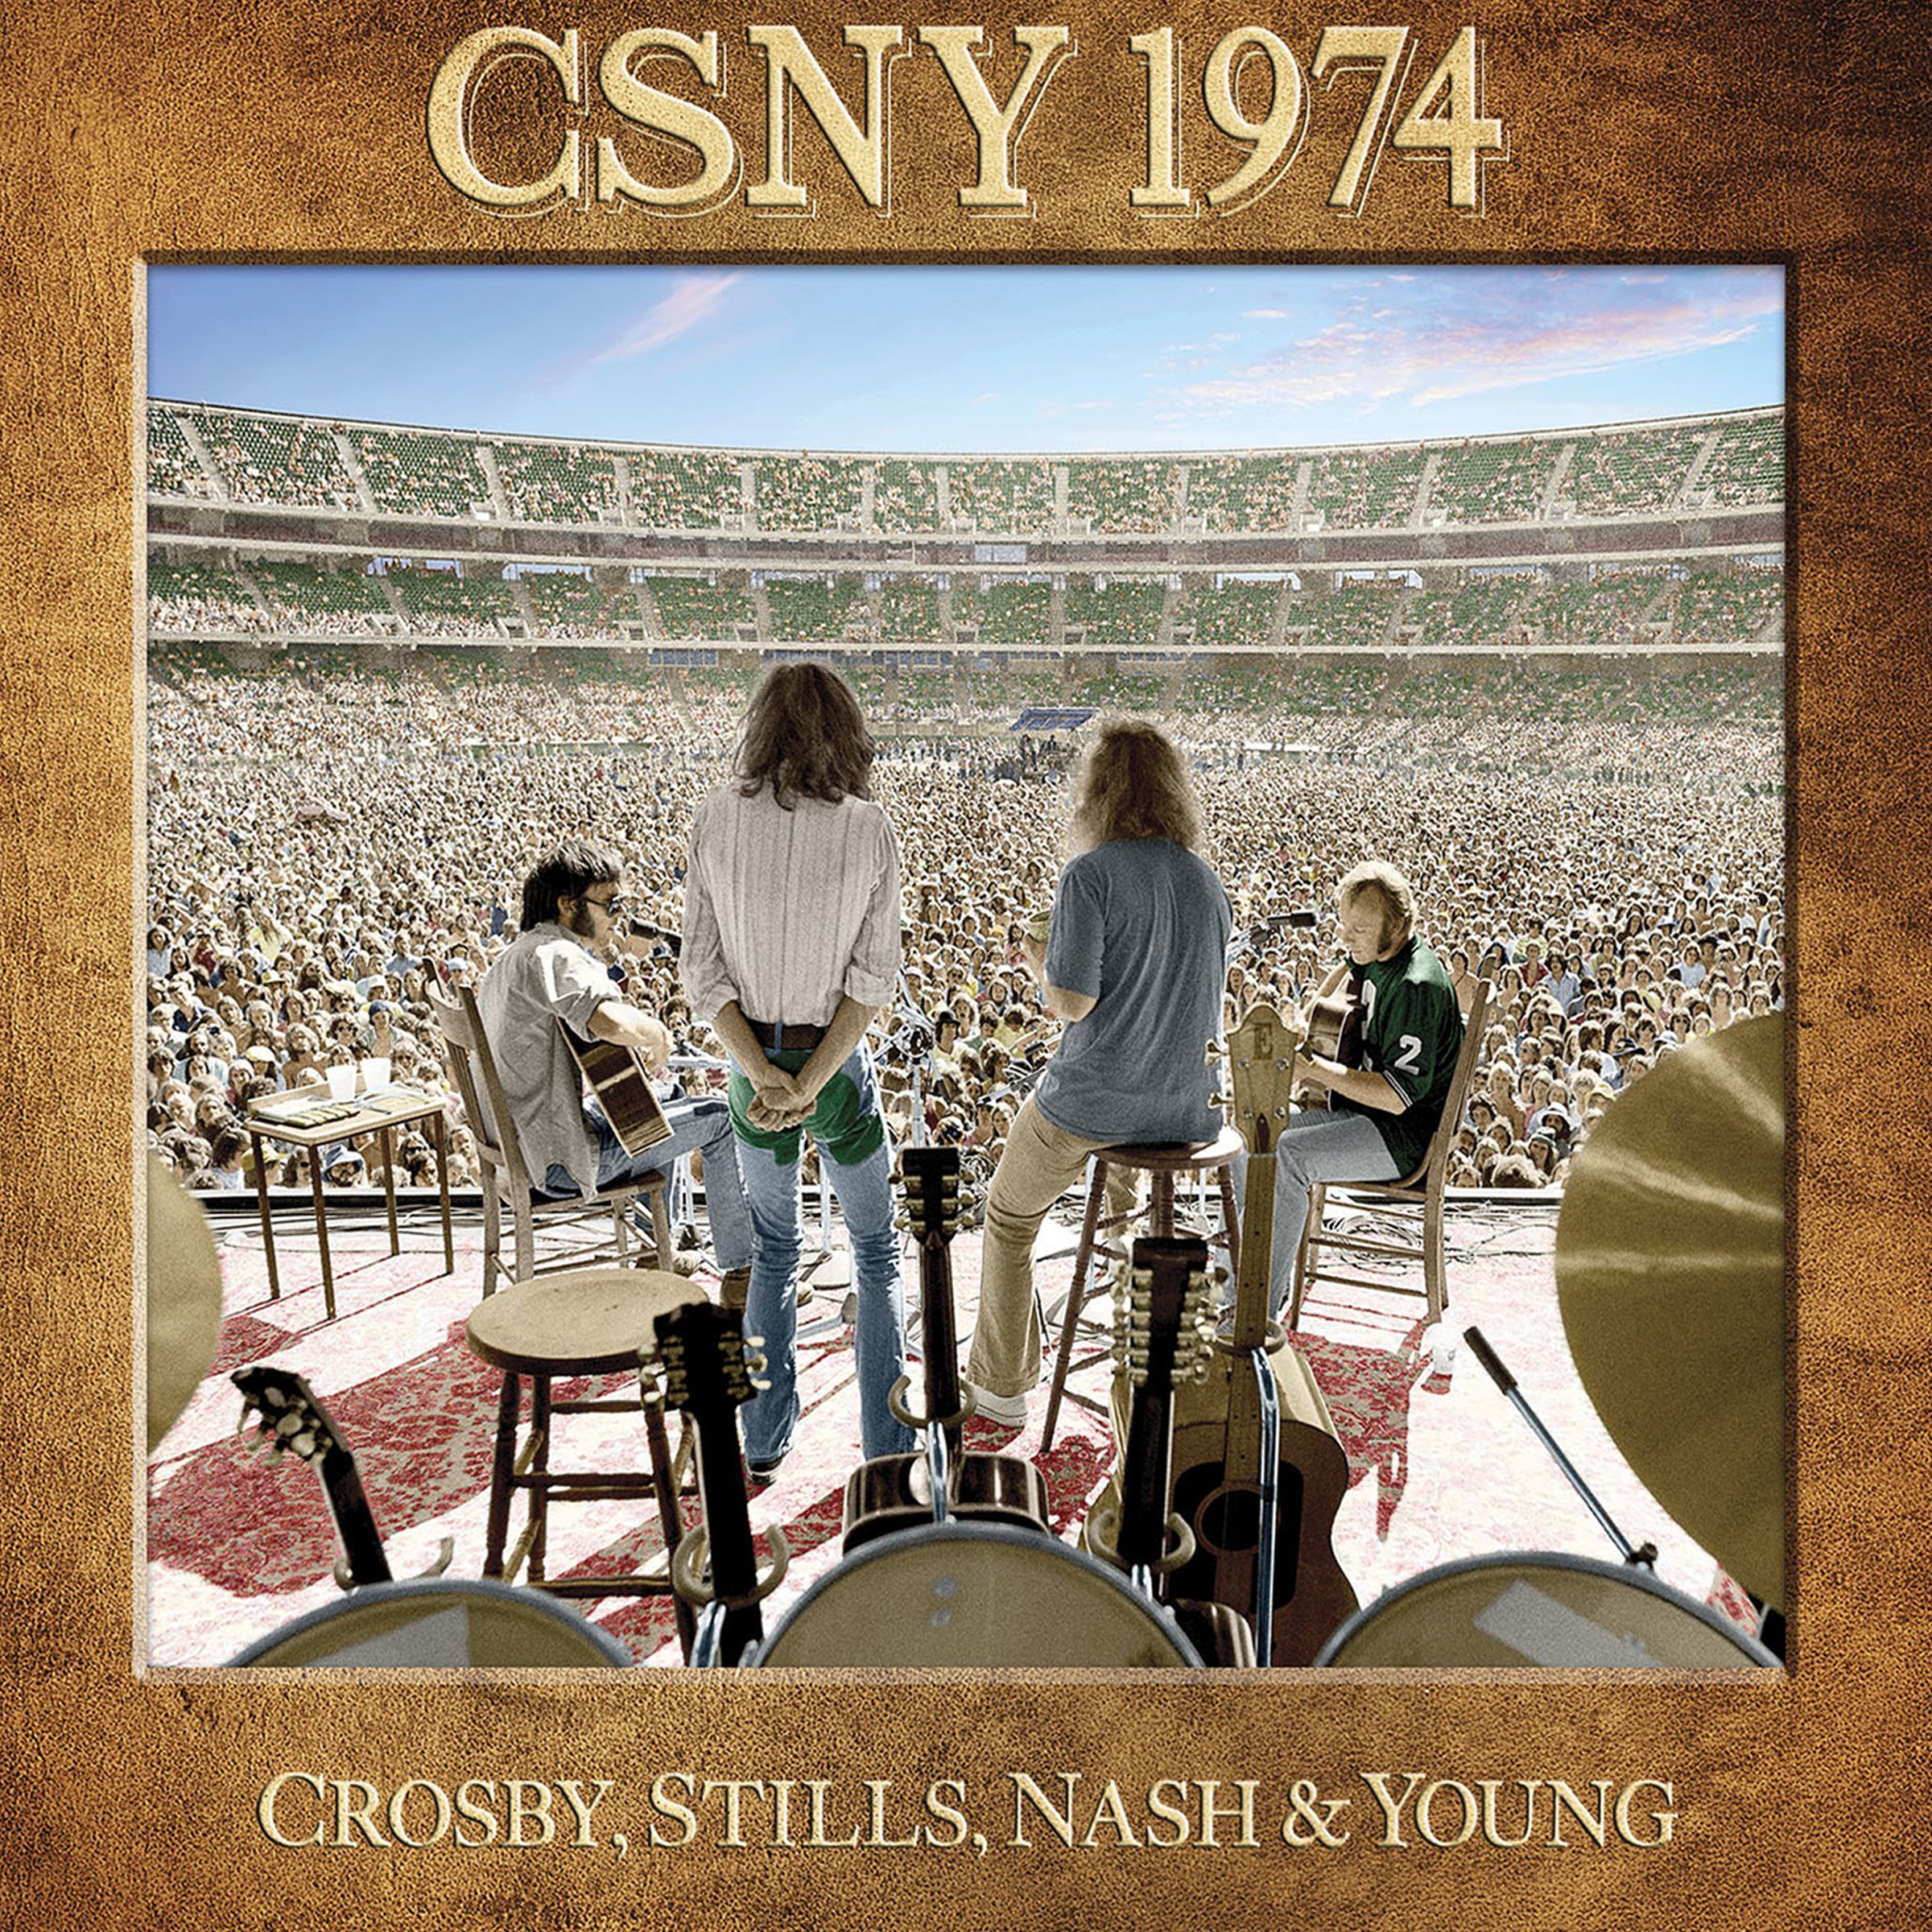 Crosby, Stills, Nash & Young – CSNY 1974 (1974/2014/2020) [FLAC 24bit/192kHz]